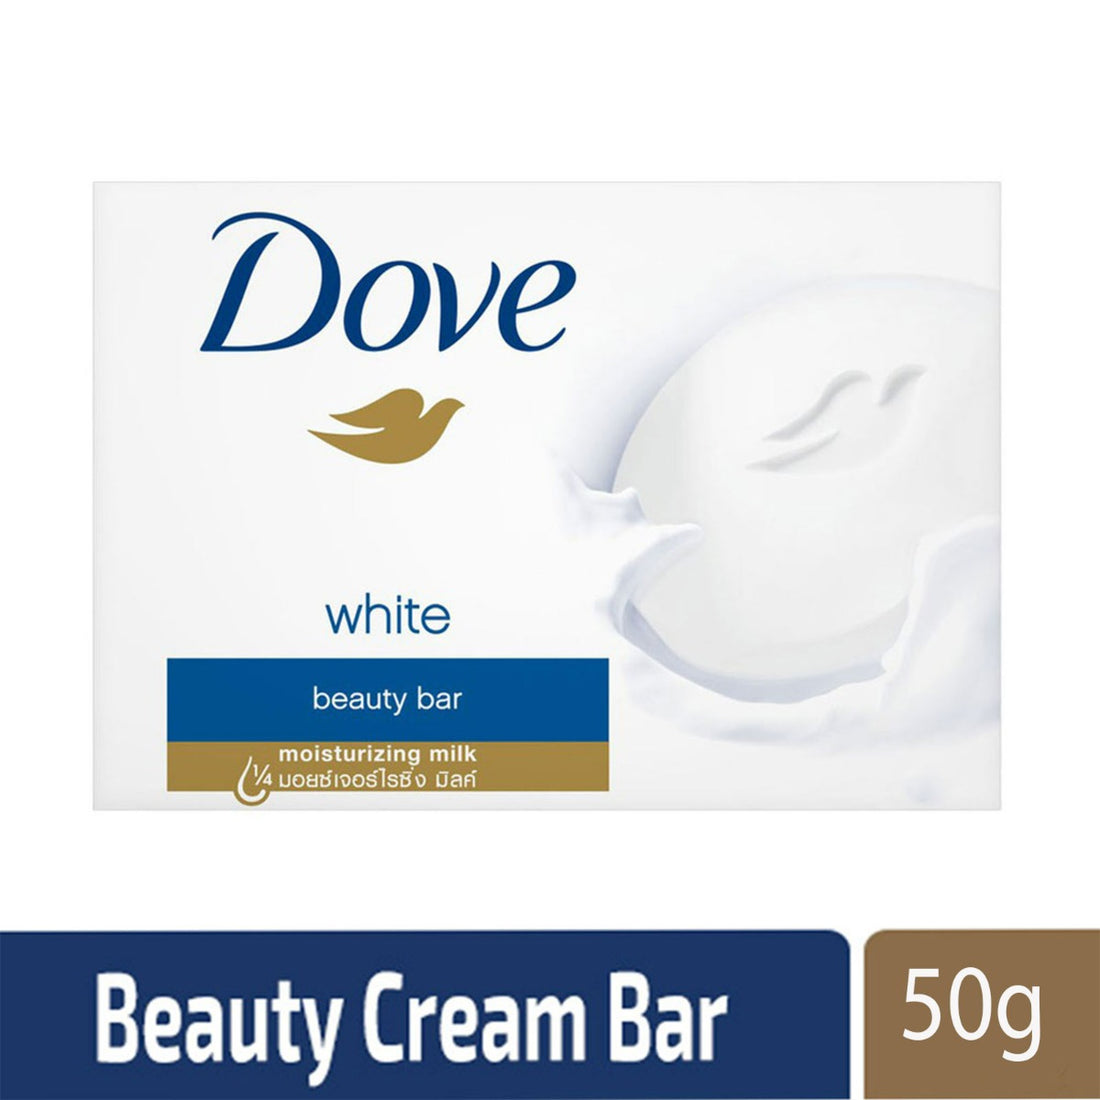 Dove Beauty Bar White